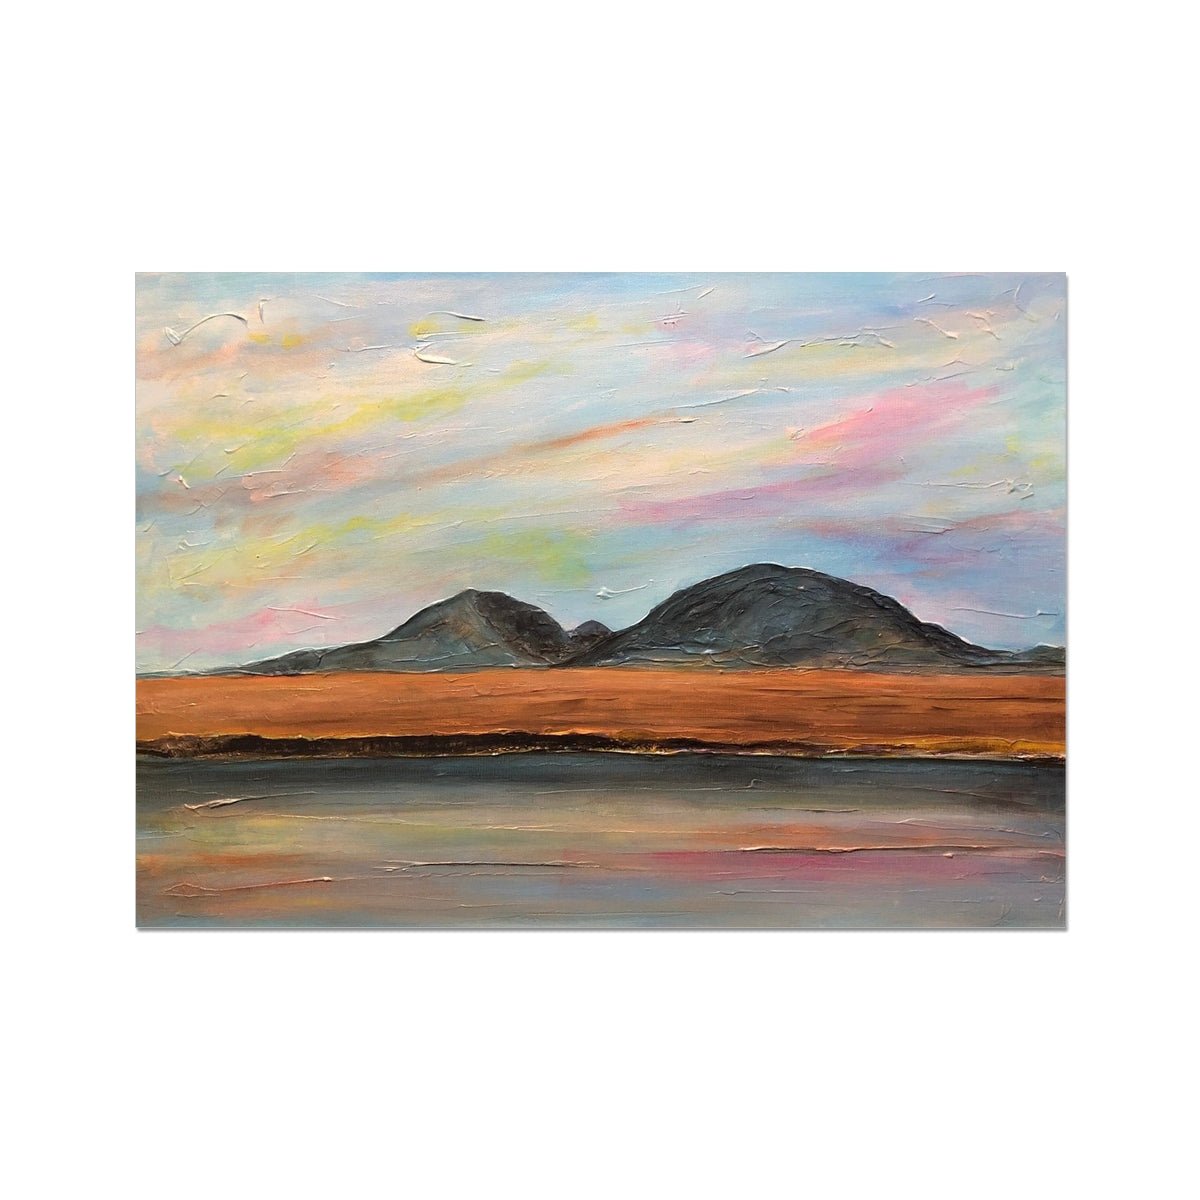 Jura Dawn Painting | Fine Art Prints From Scotland-Unframed Prints-Hebridean Islands Art Gallery-A2 Landscape-Paintings, Prints, Homeware, Art Gifts From Scotland By Scottish Artist Kevin Hunter